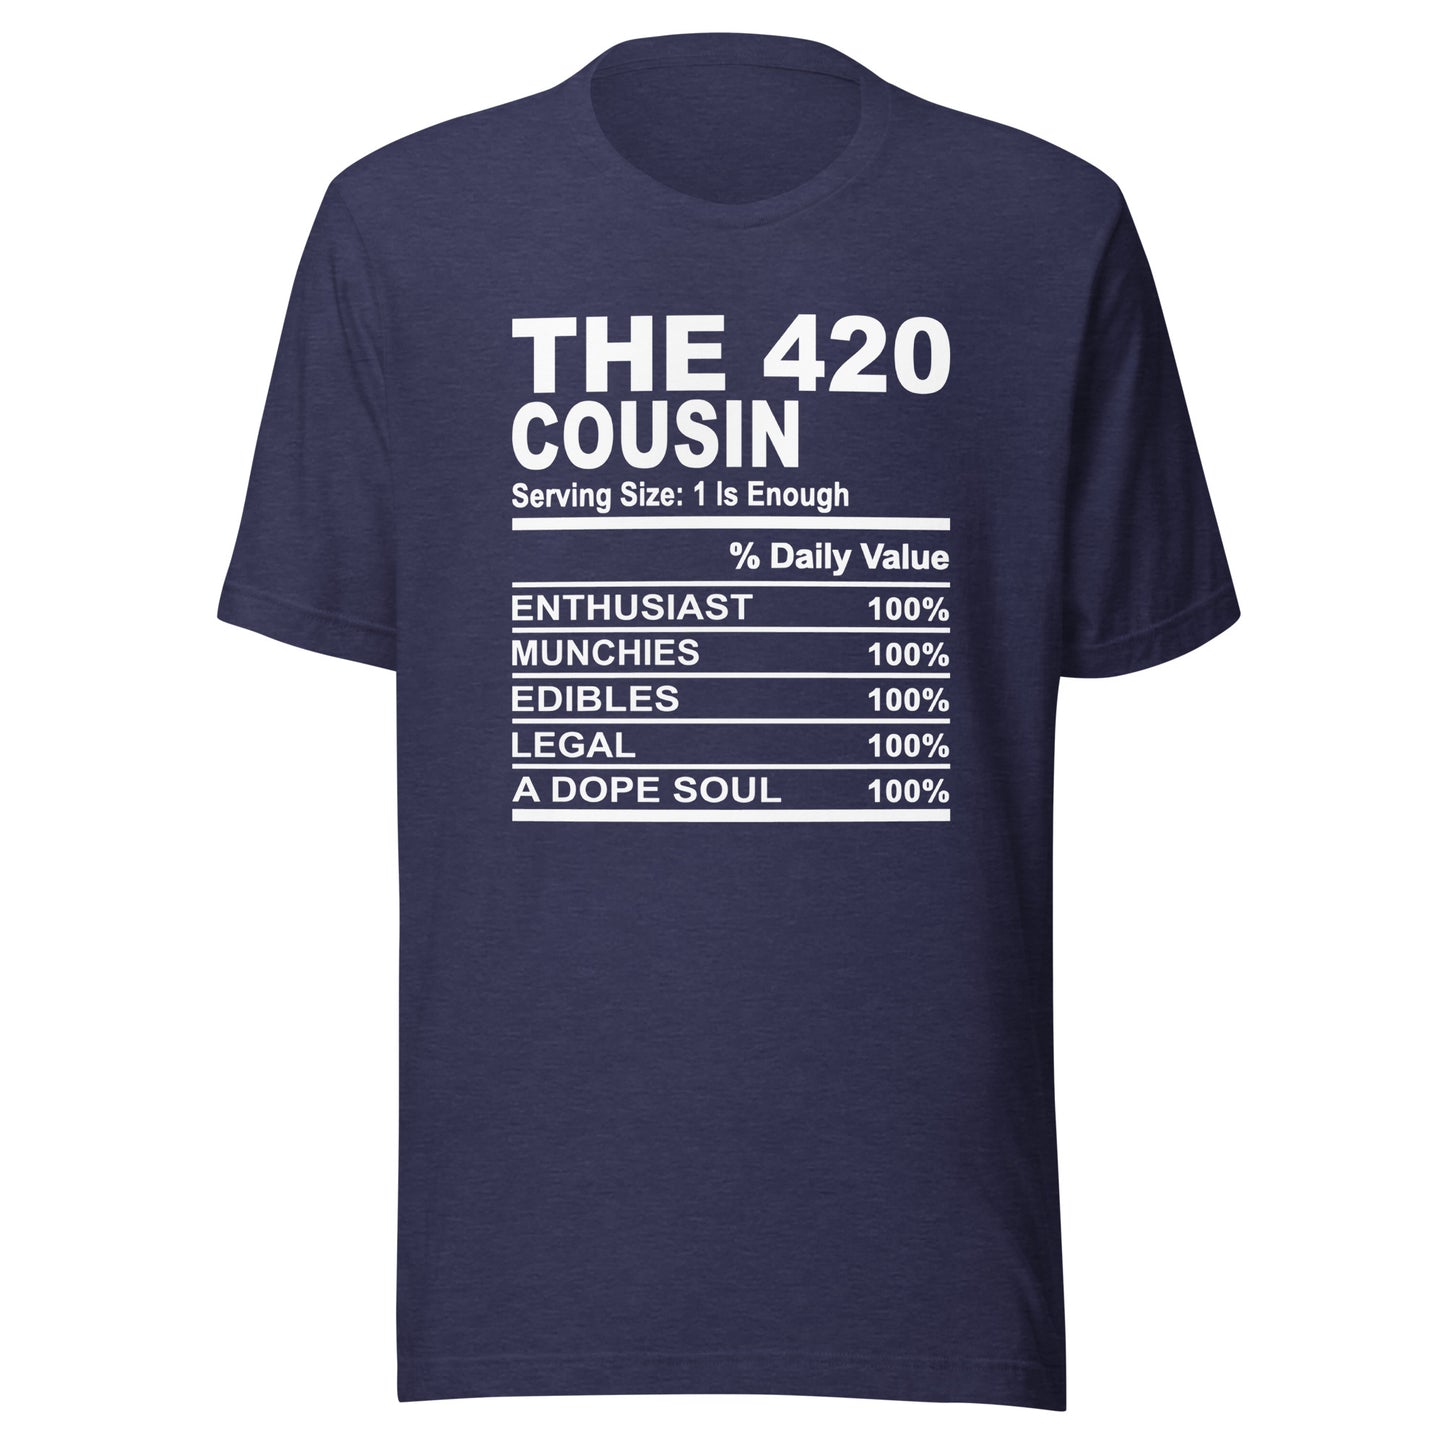 THE 420 COUSIN - 4X - Unisex T-Shirt (white print)